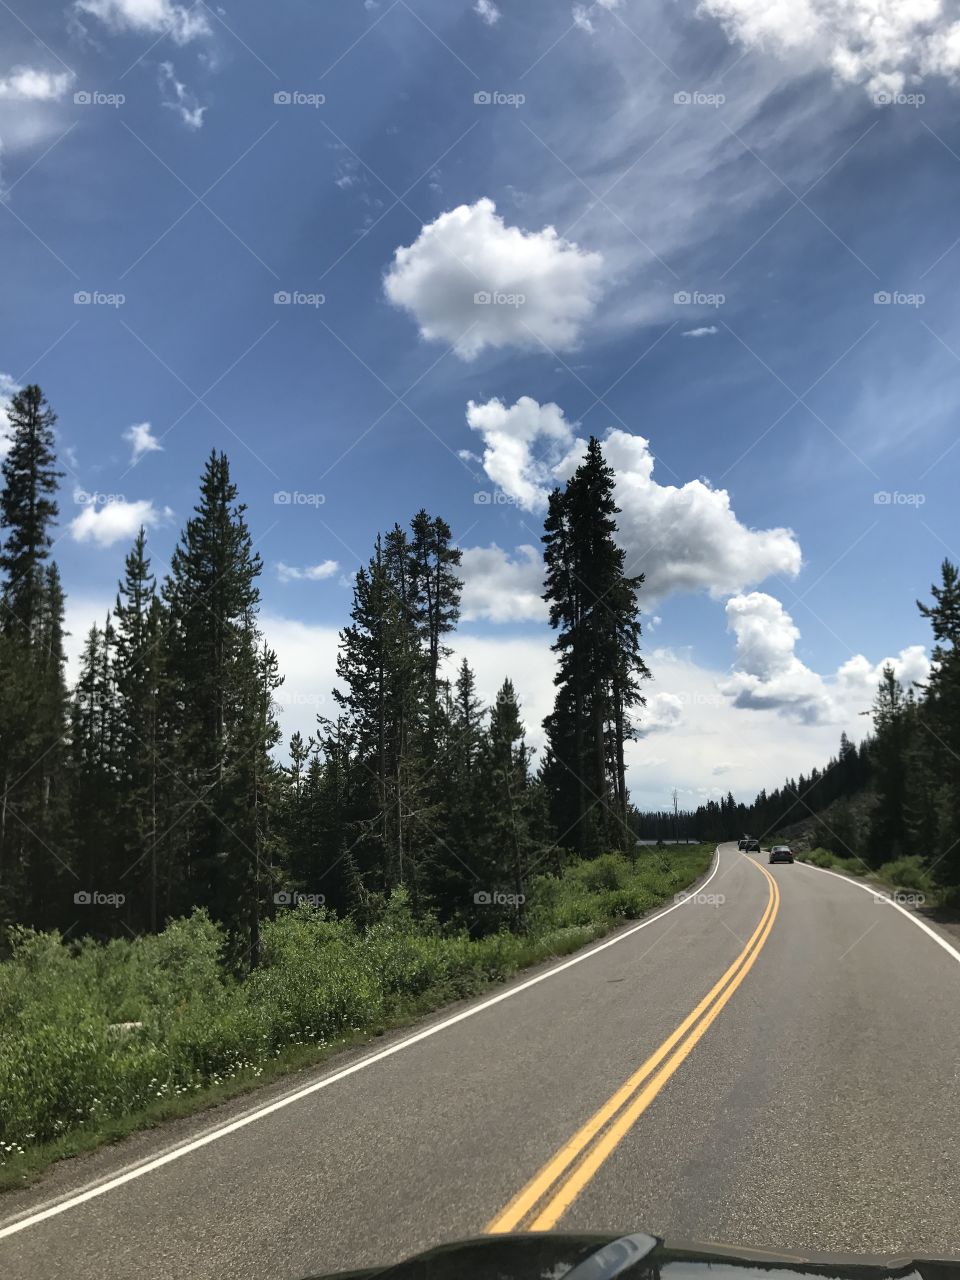 Nature road